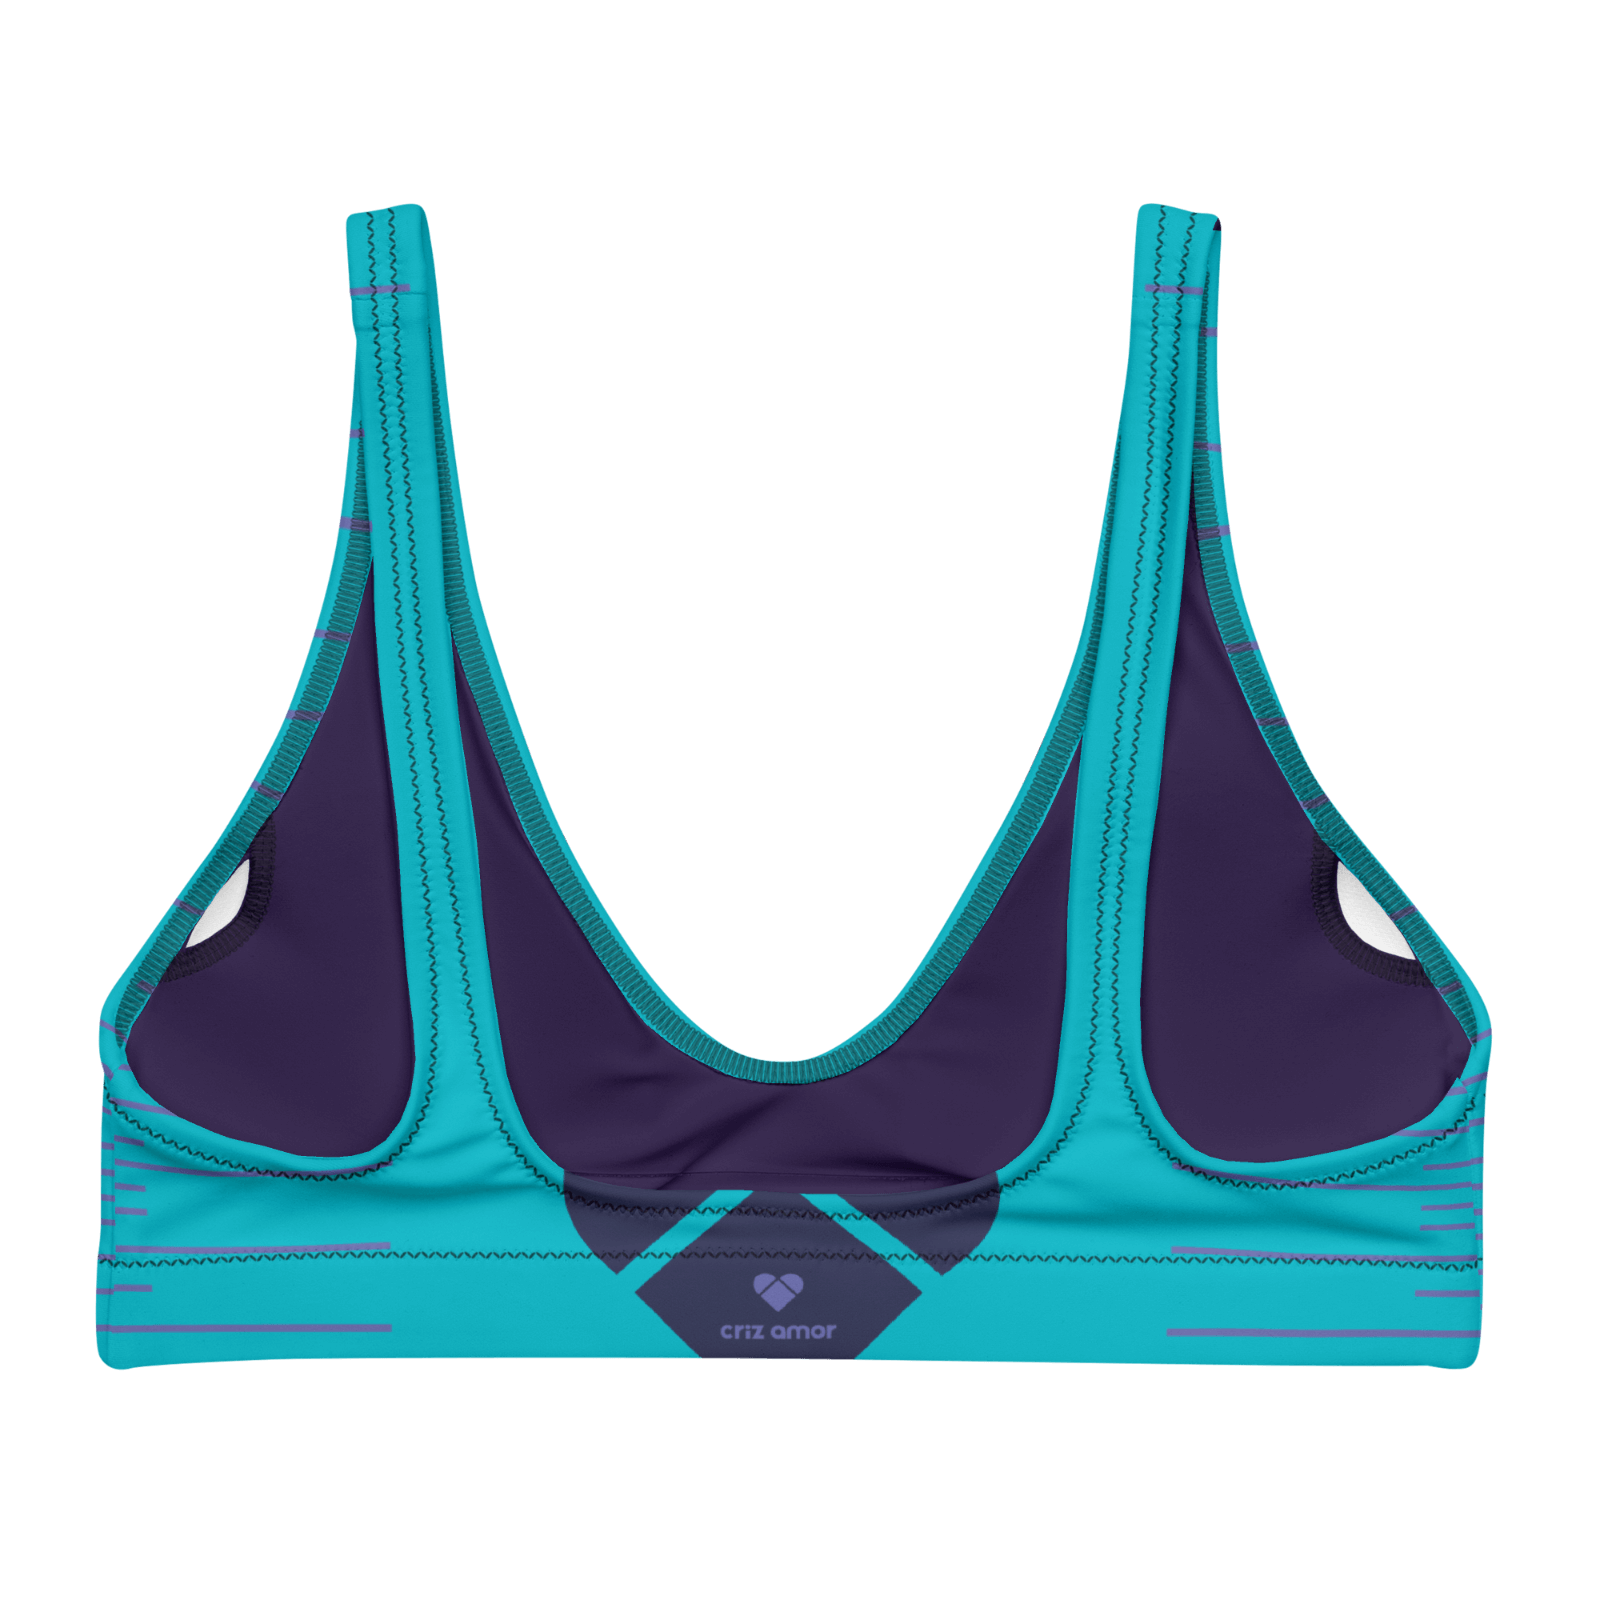 Designer Bikini Top in Turquoise and Periwinkle Stripes